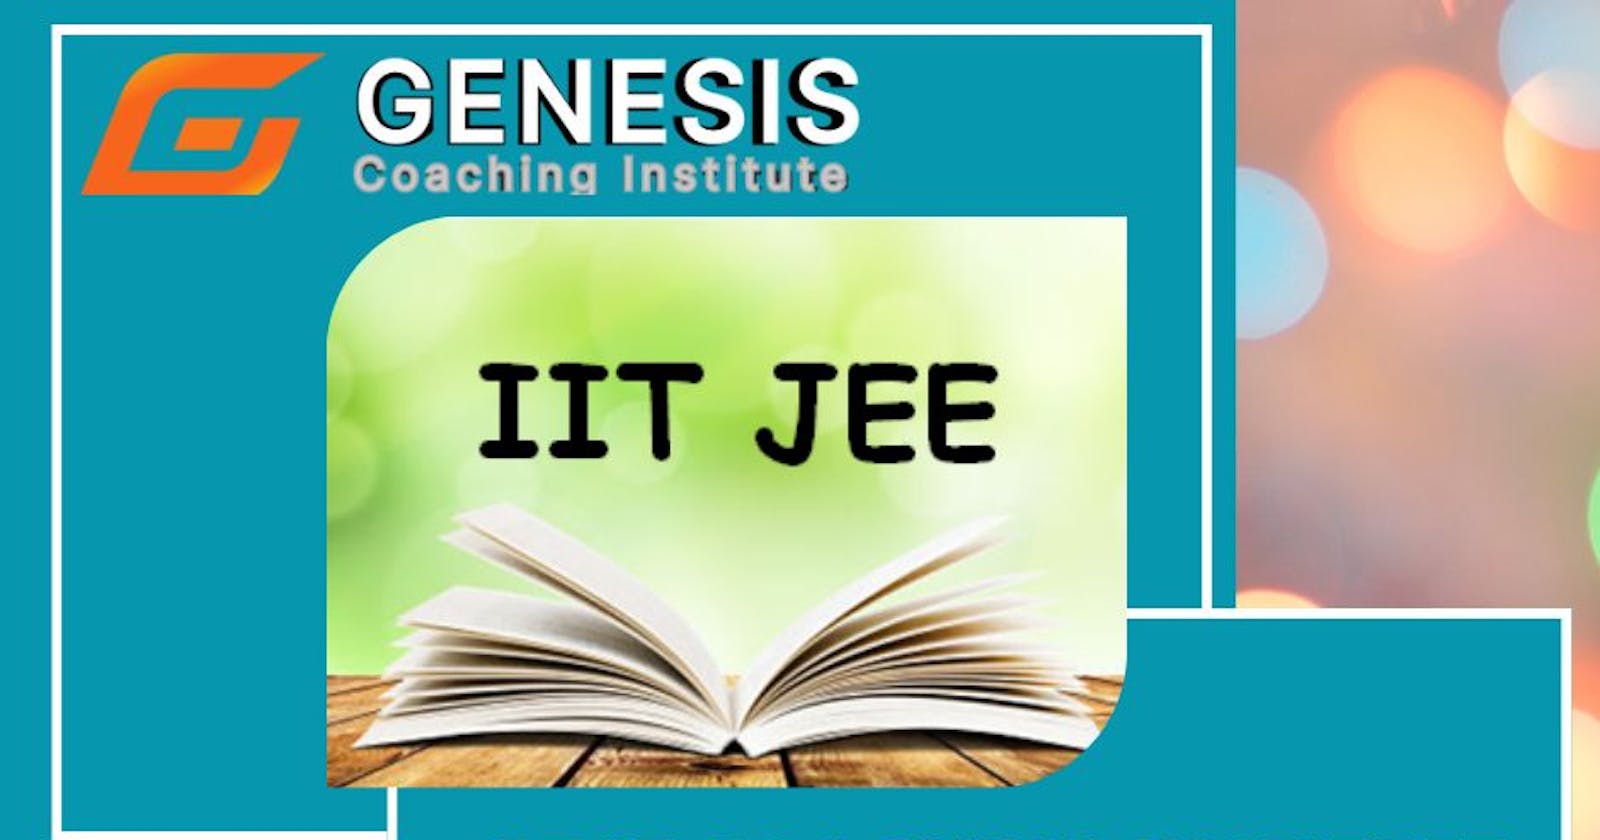 Best Coaching Institute for IIT JEE in Himachal Pradesh - Genesis Coaching Institute